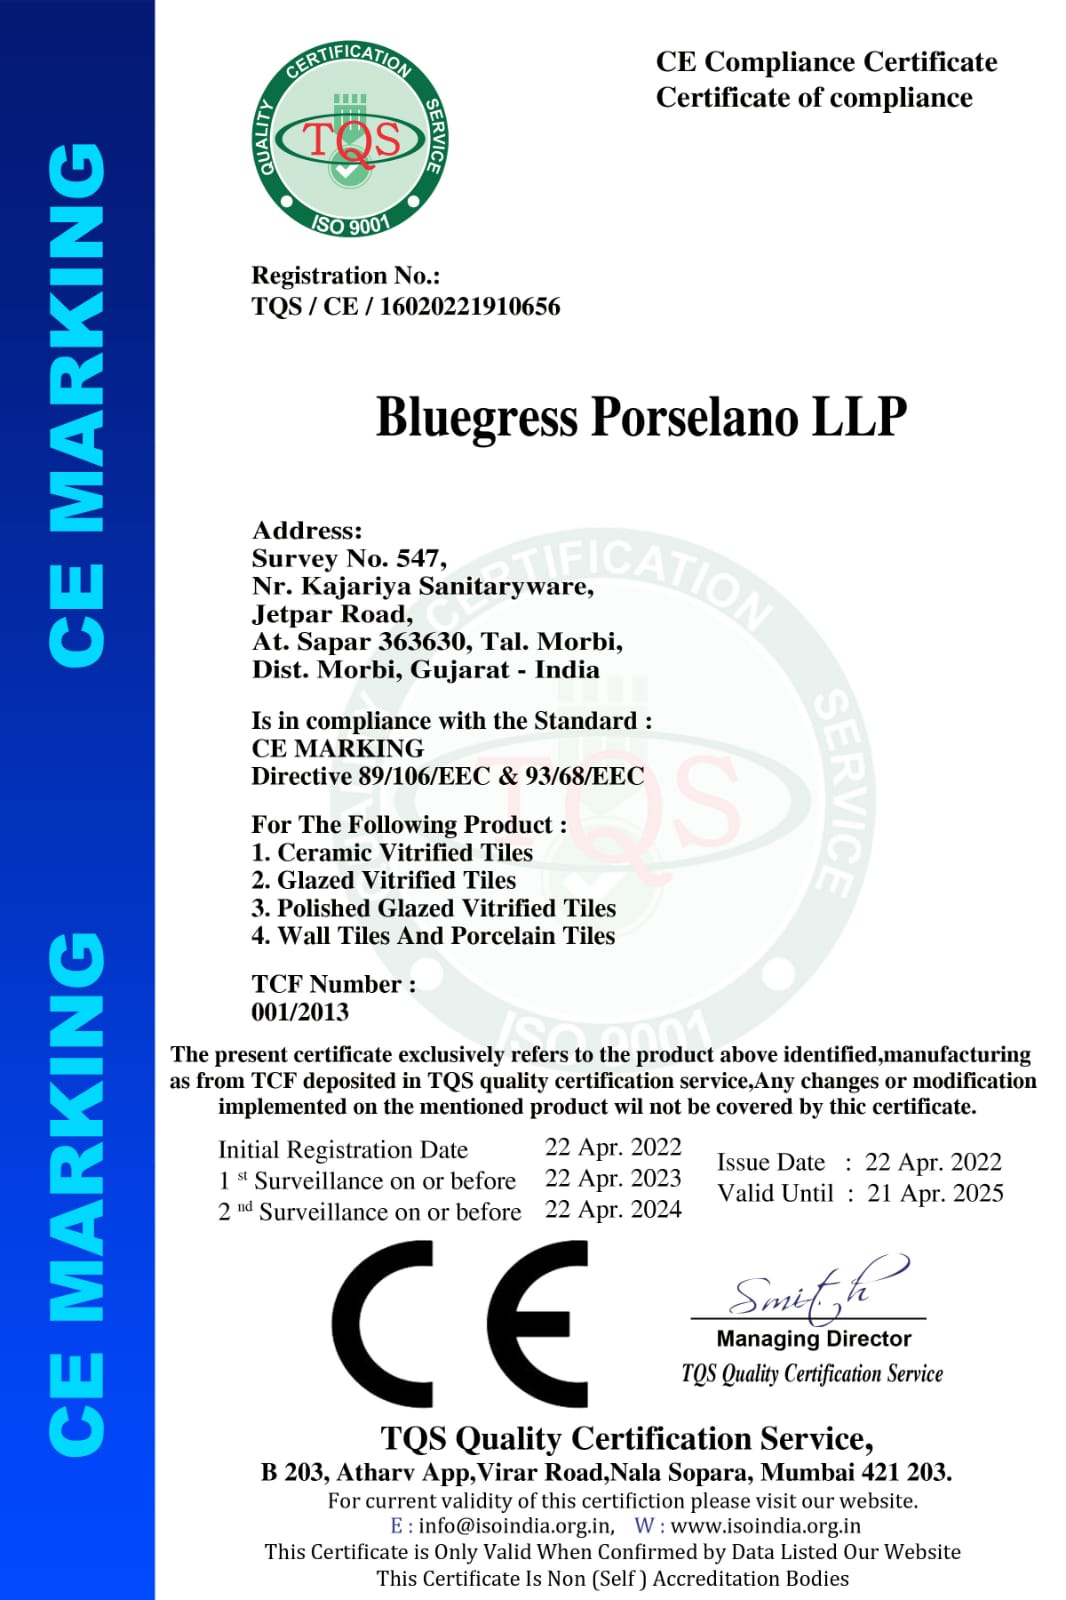 Bluegress Porcelano LLP CE Compliance